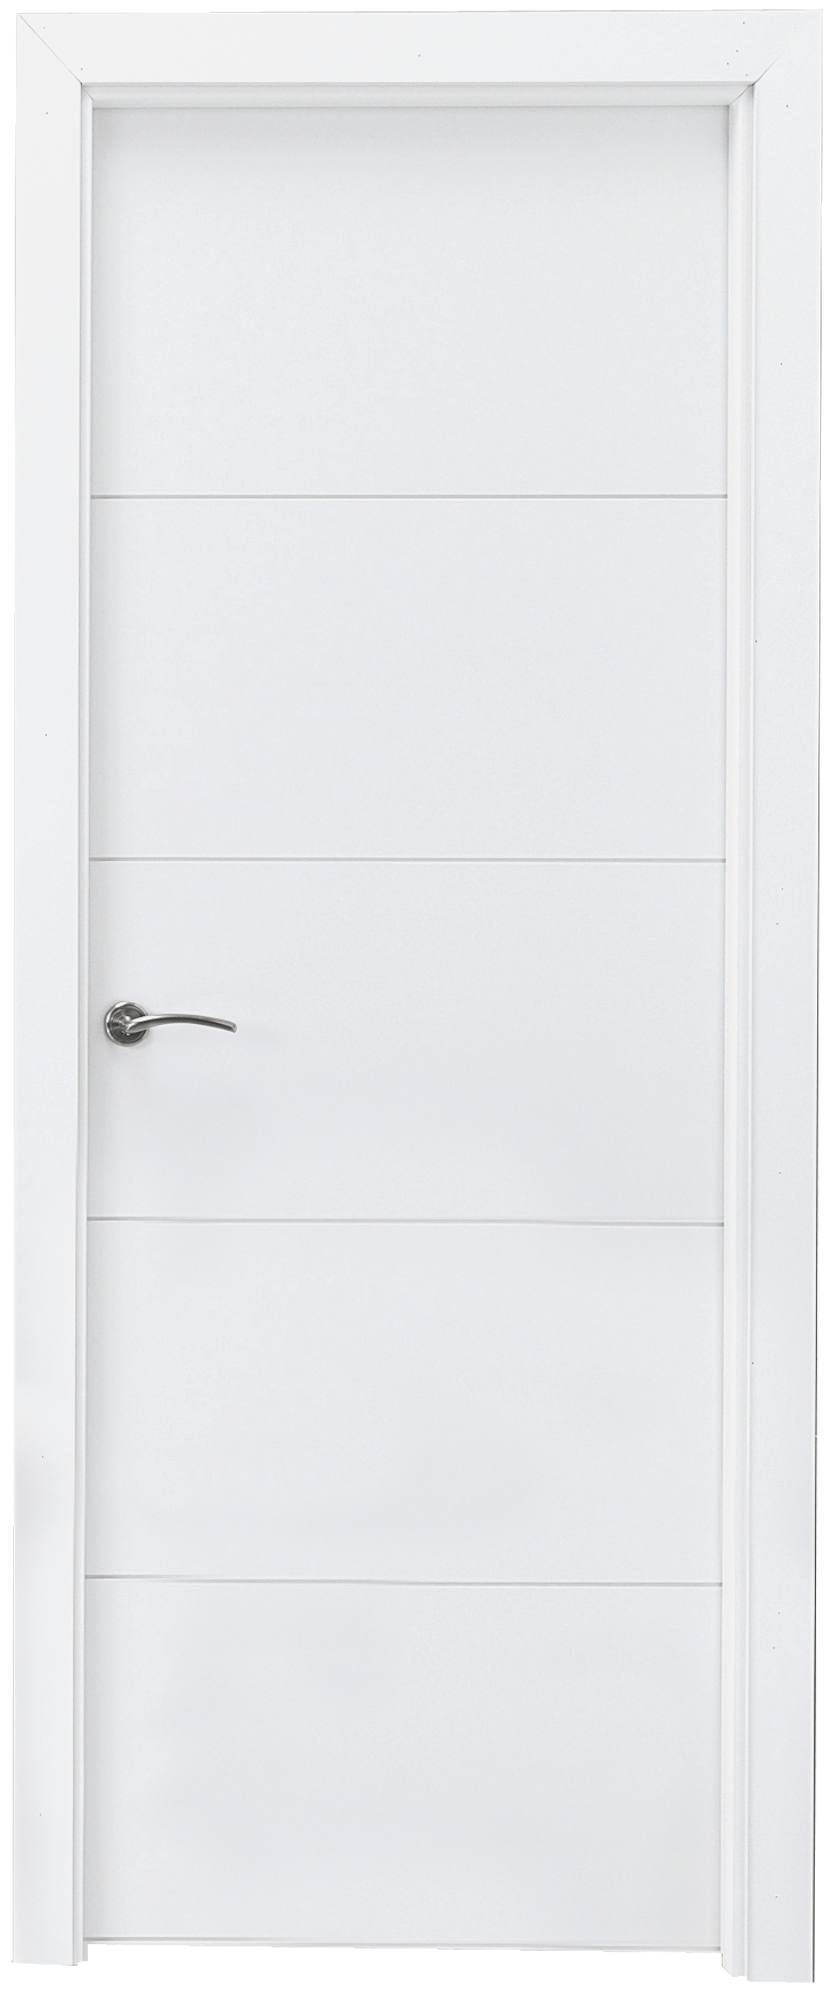 Puerta lucerna blanca de apertura derecha de 72,5 cm